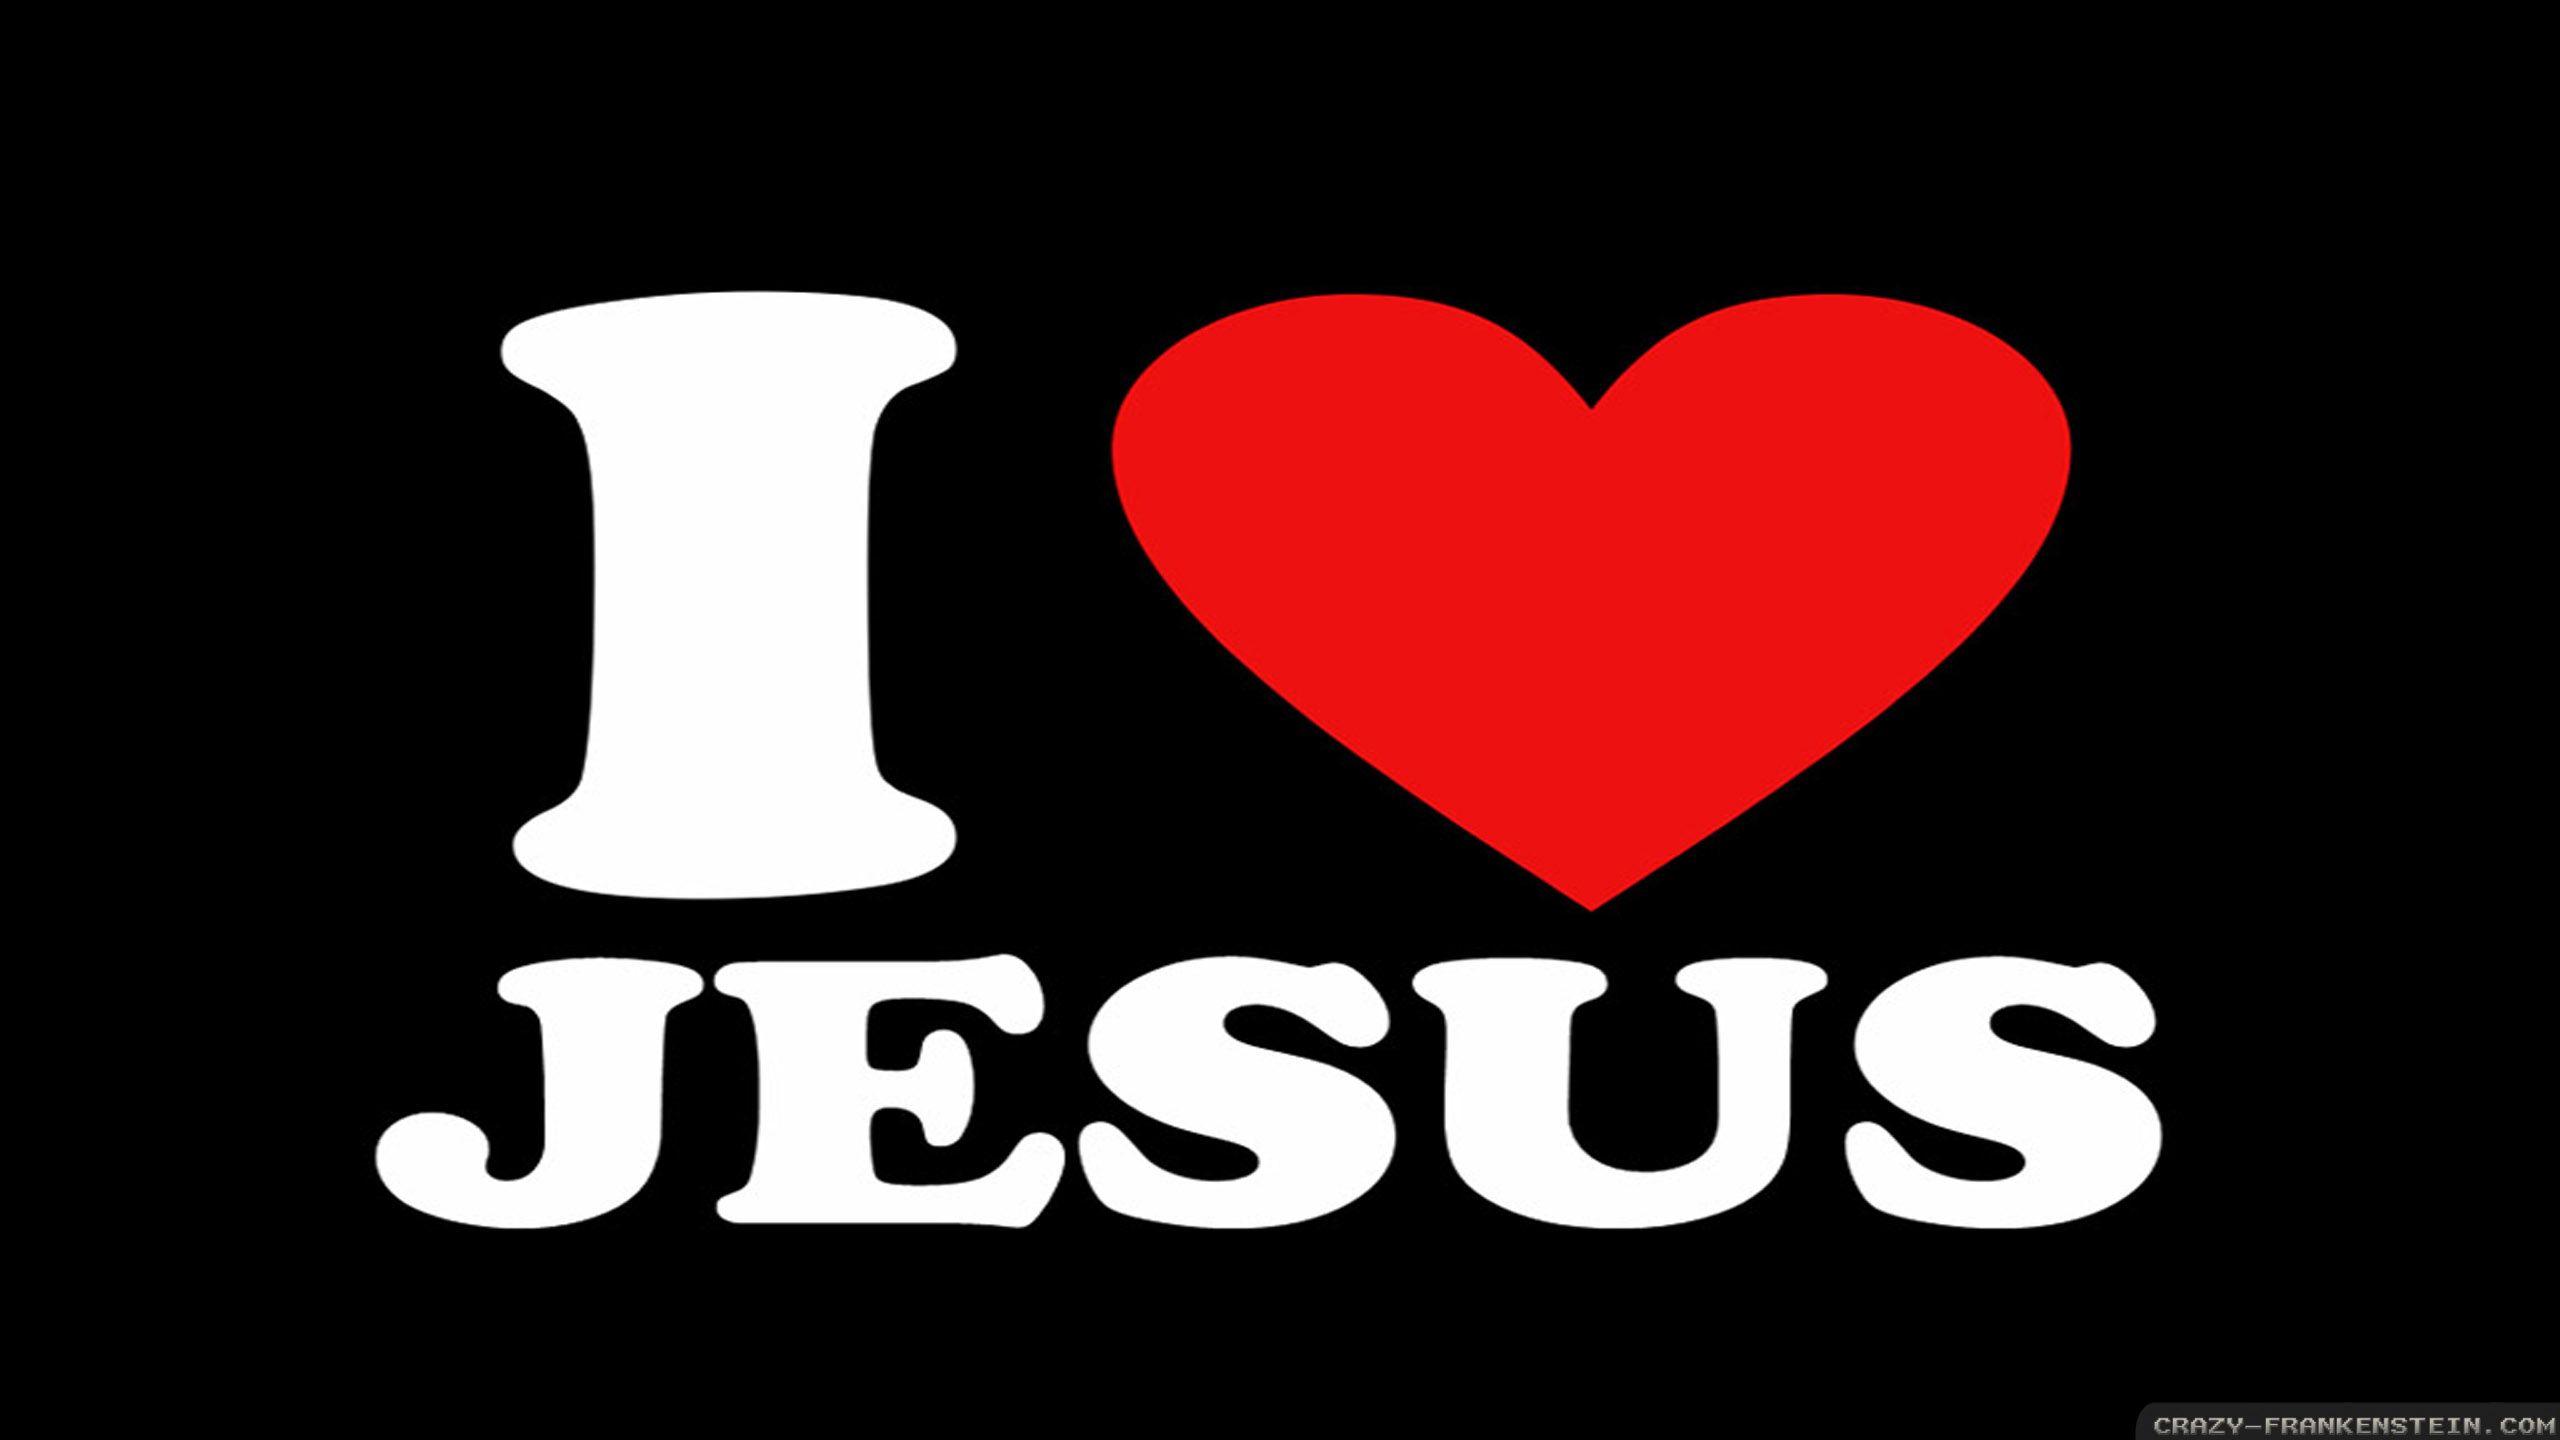 Love Jesus wallpaper